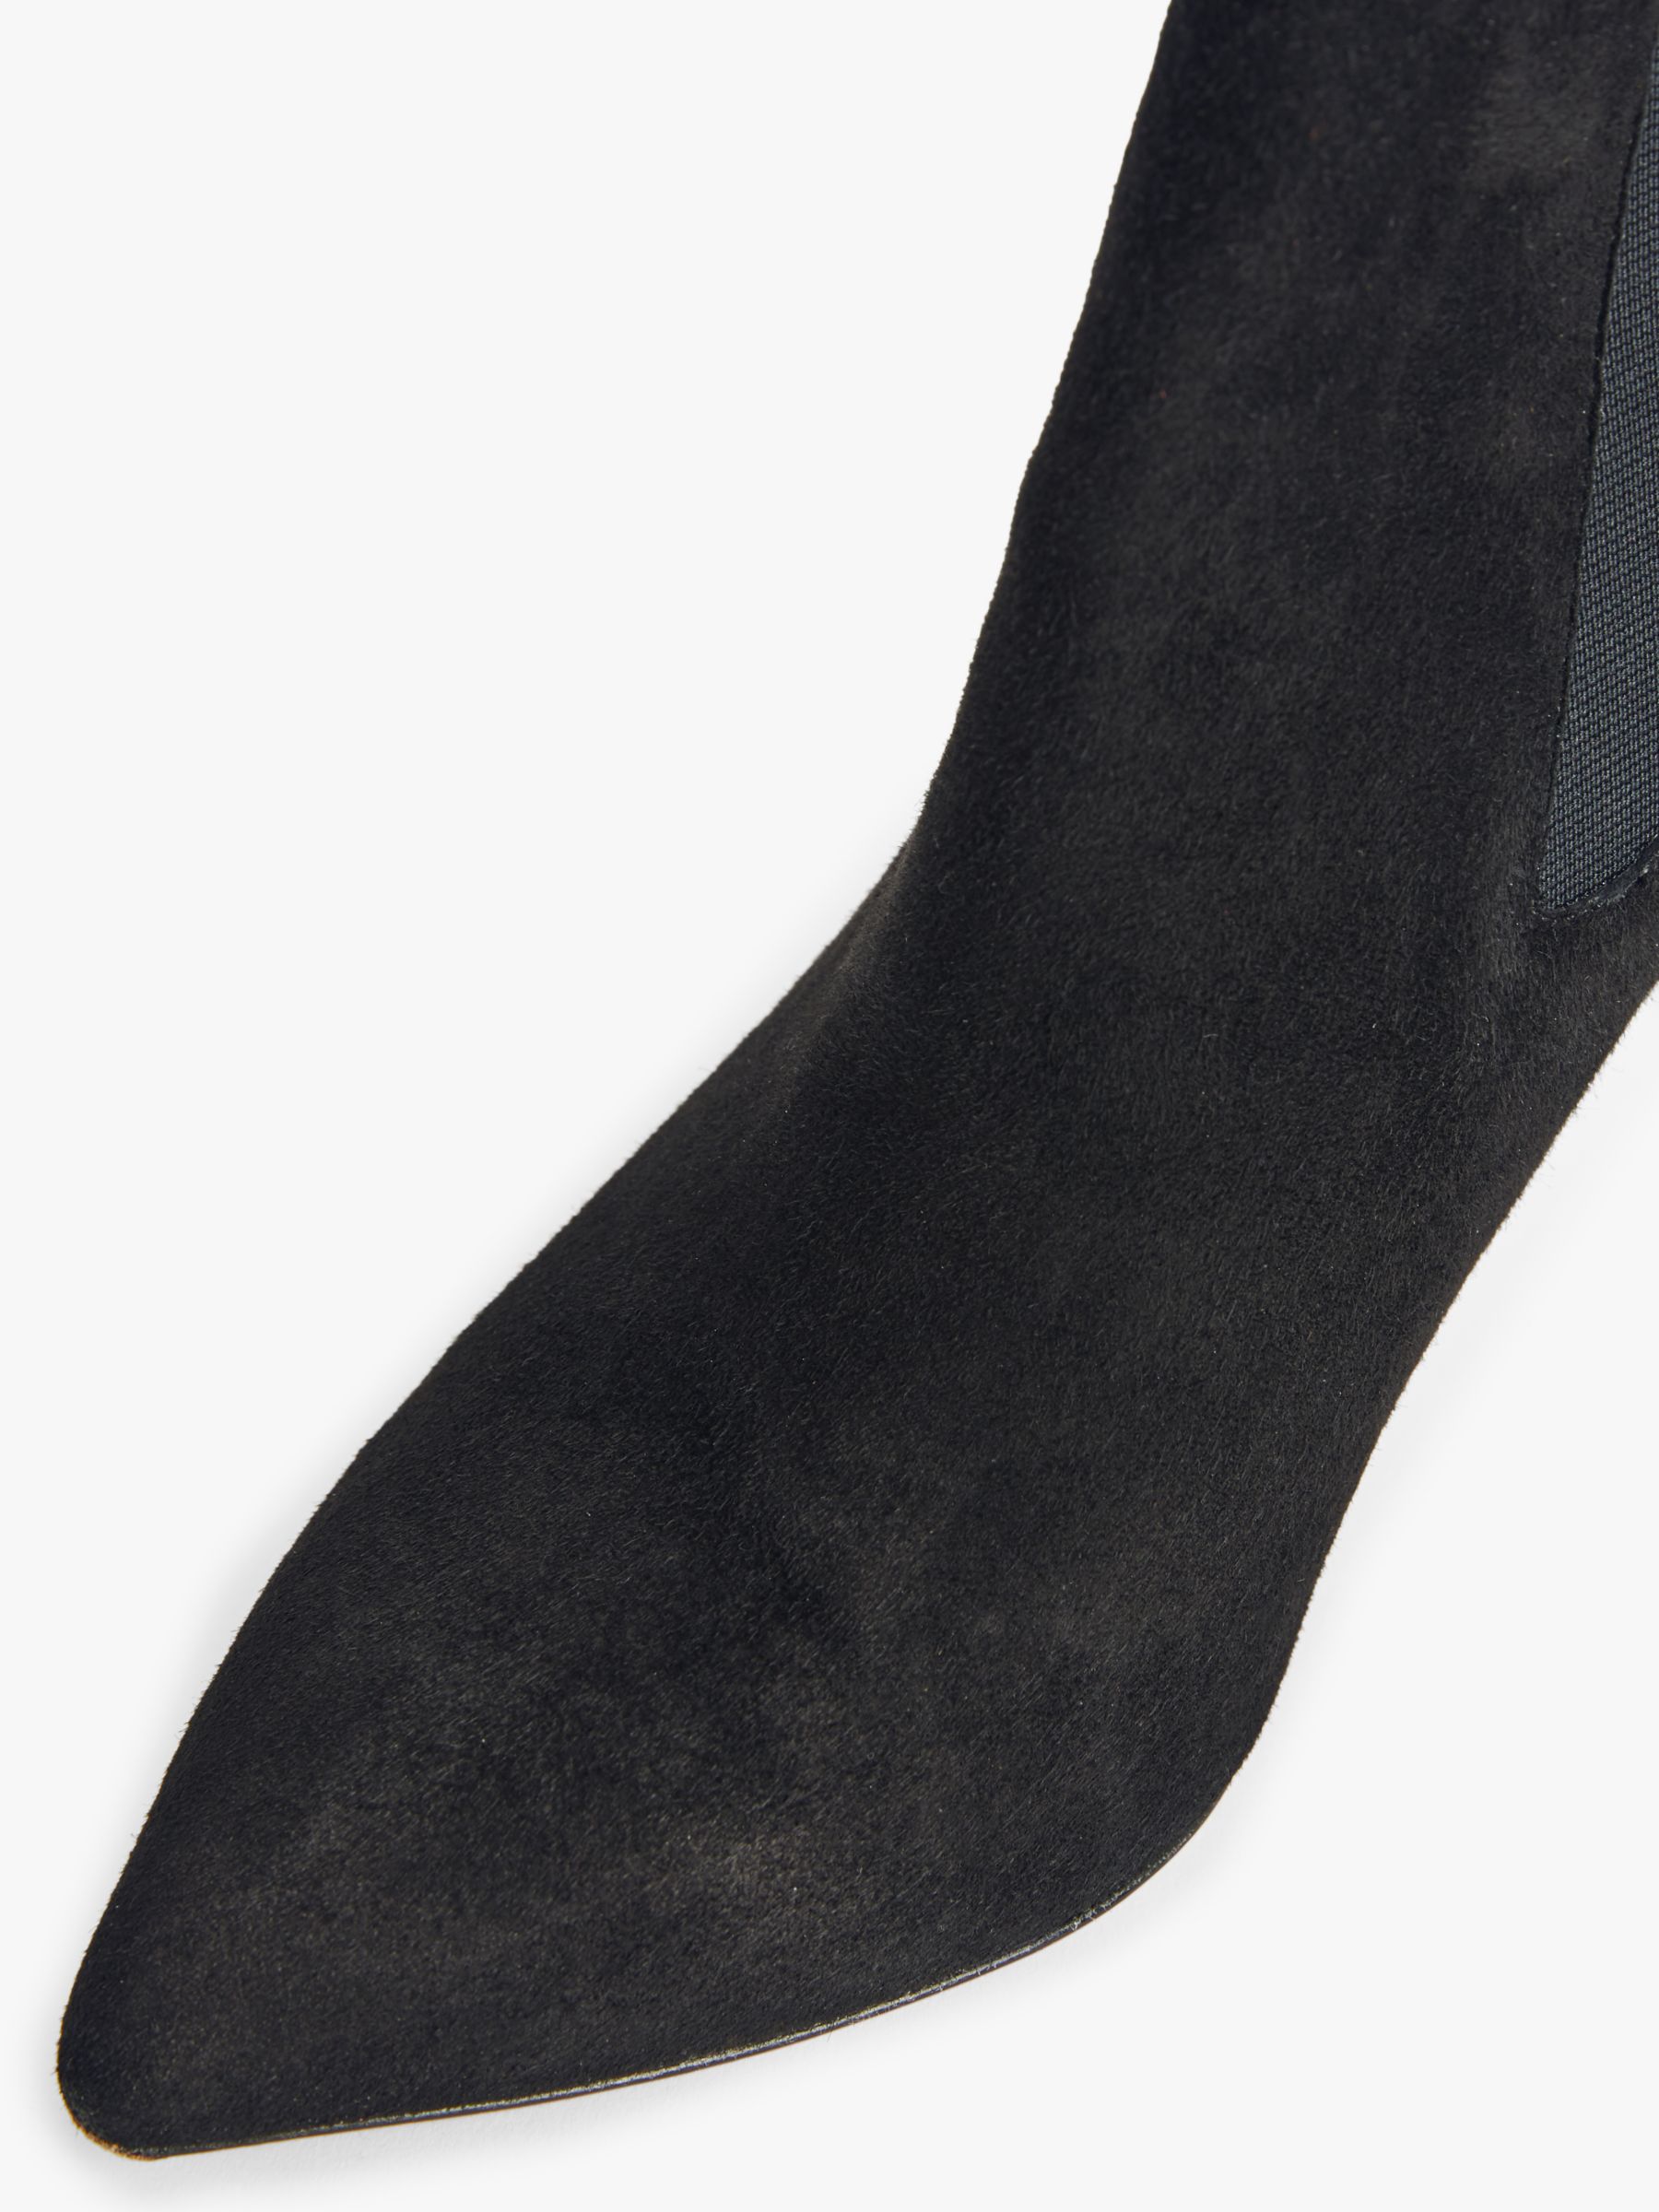 Buy Boden Elsworth Pointed Toe Ankle Boots, Black Online at johnlewis.com